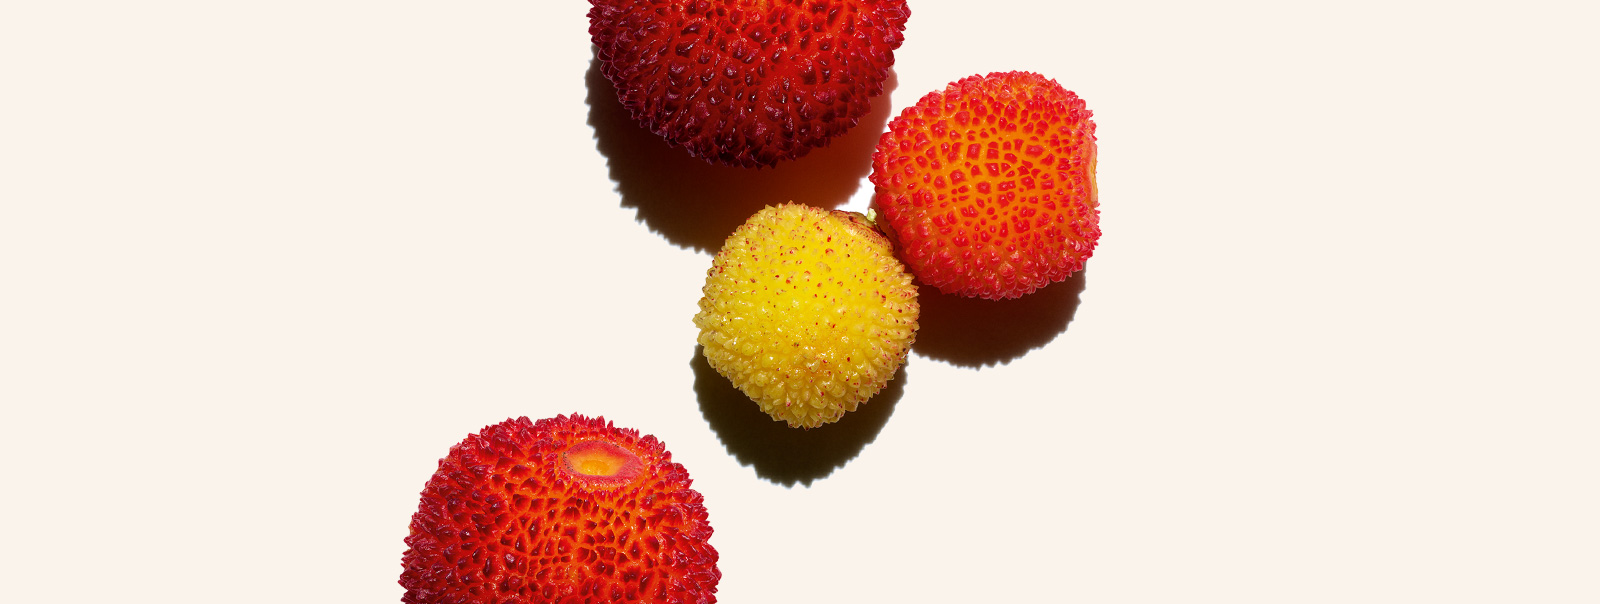 strawberry tree fruit extract 